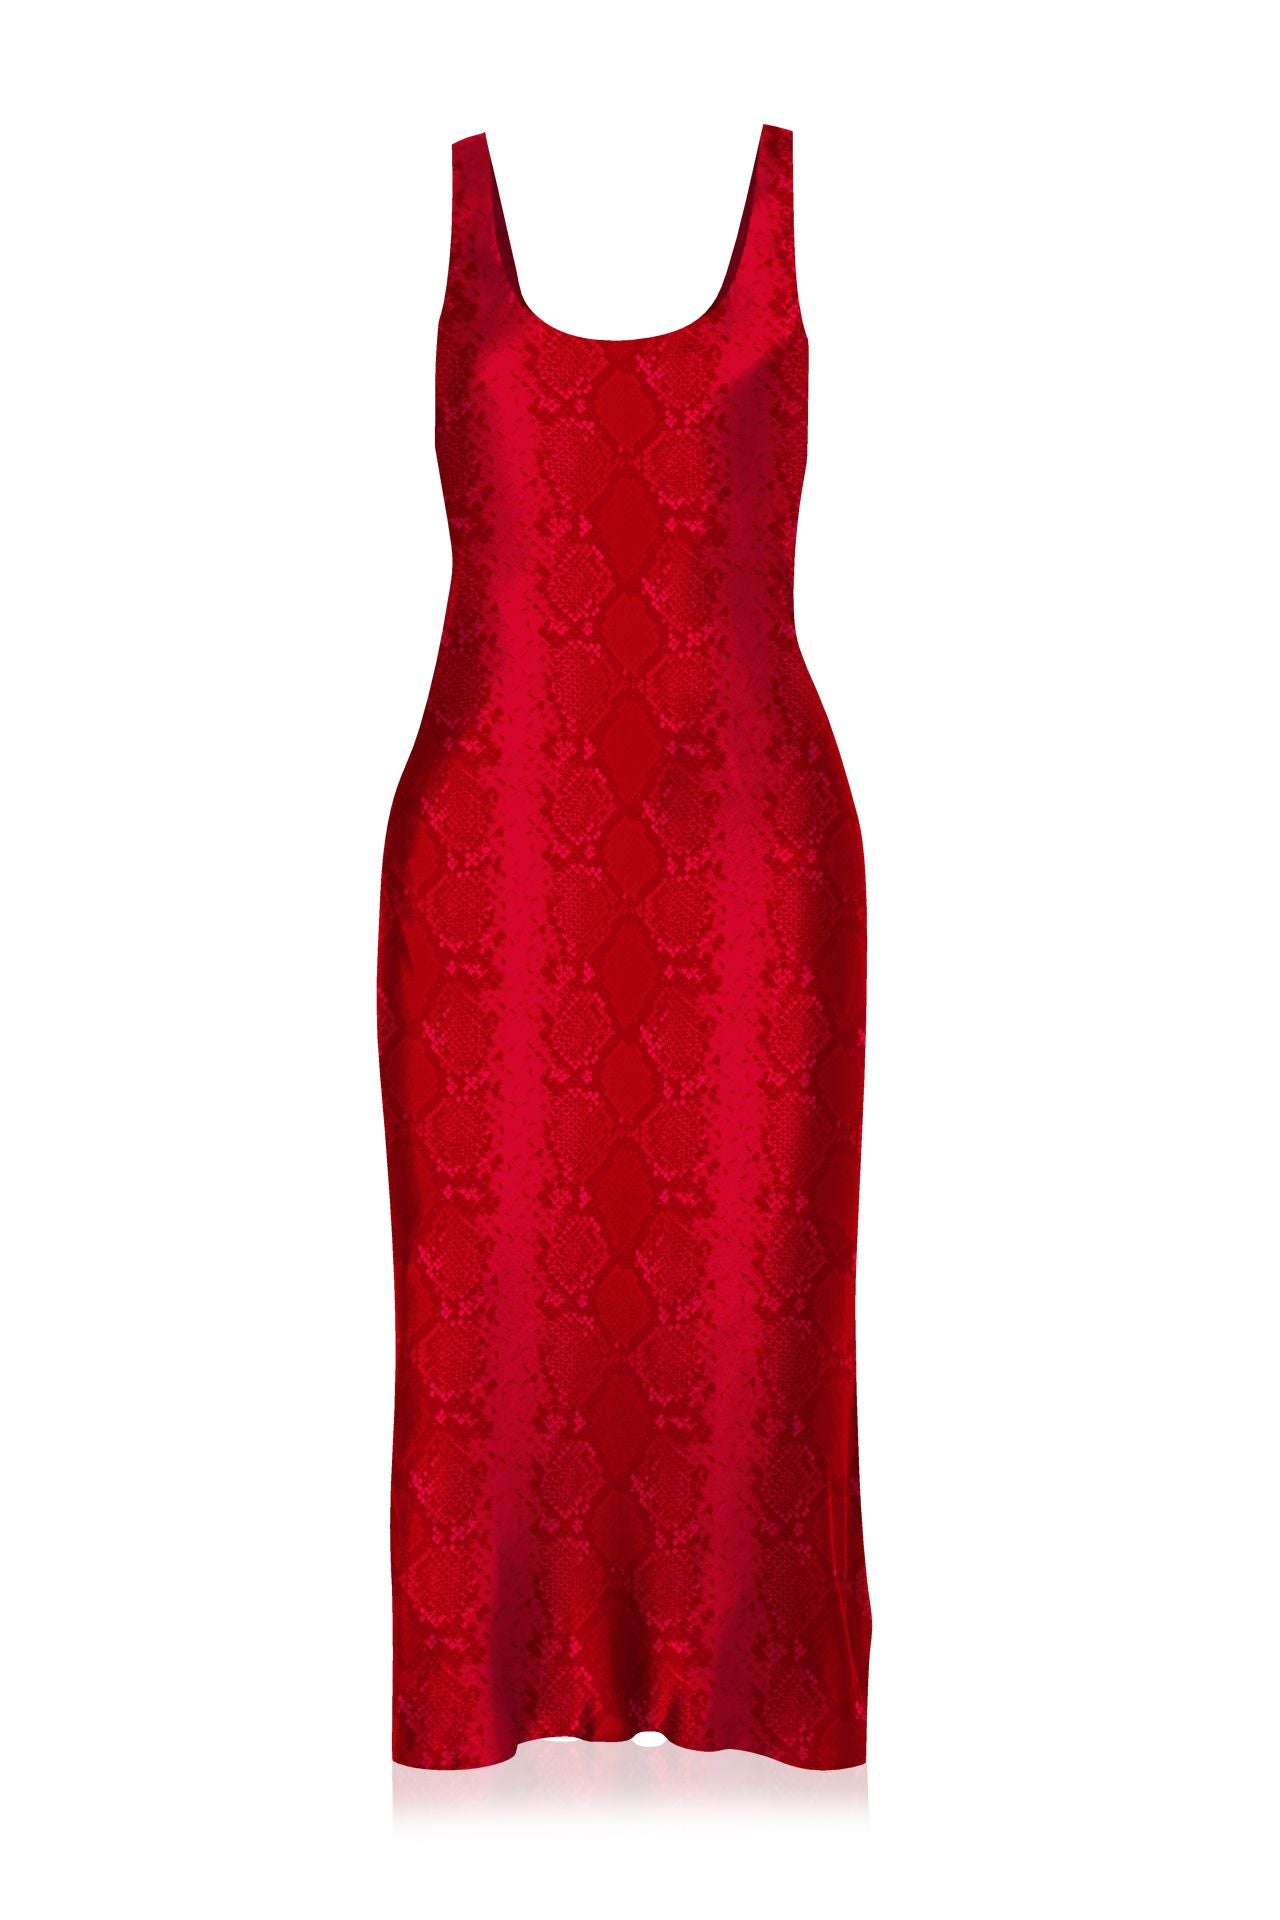 Midi Length Cami Dress in Blood Stone